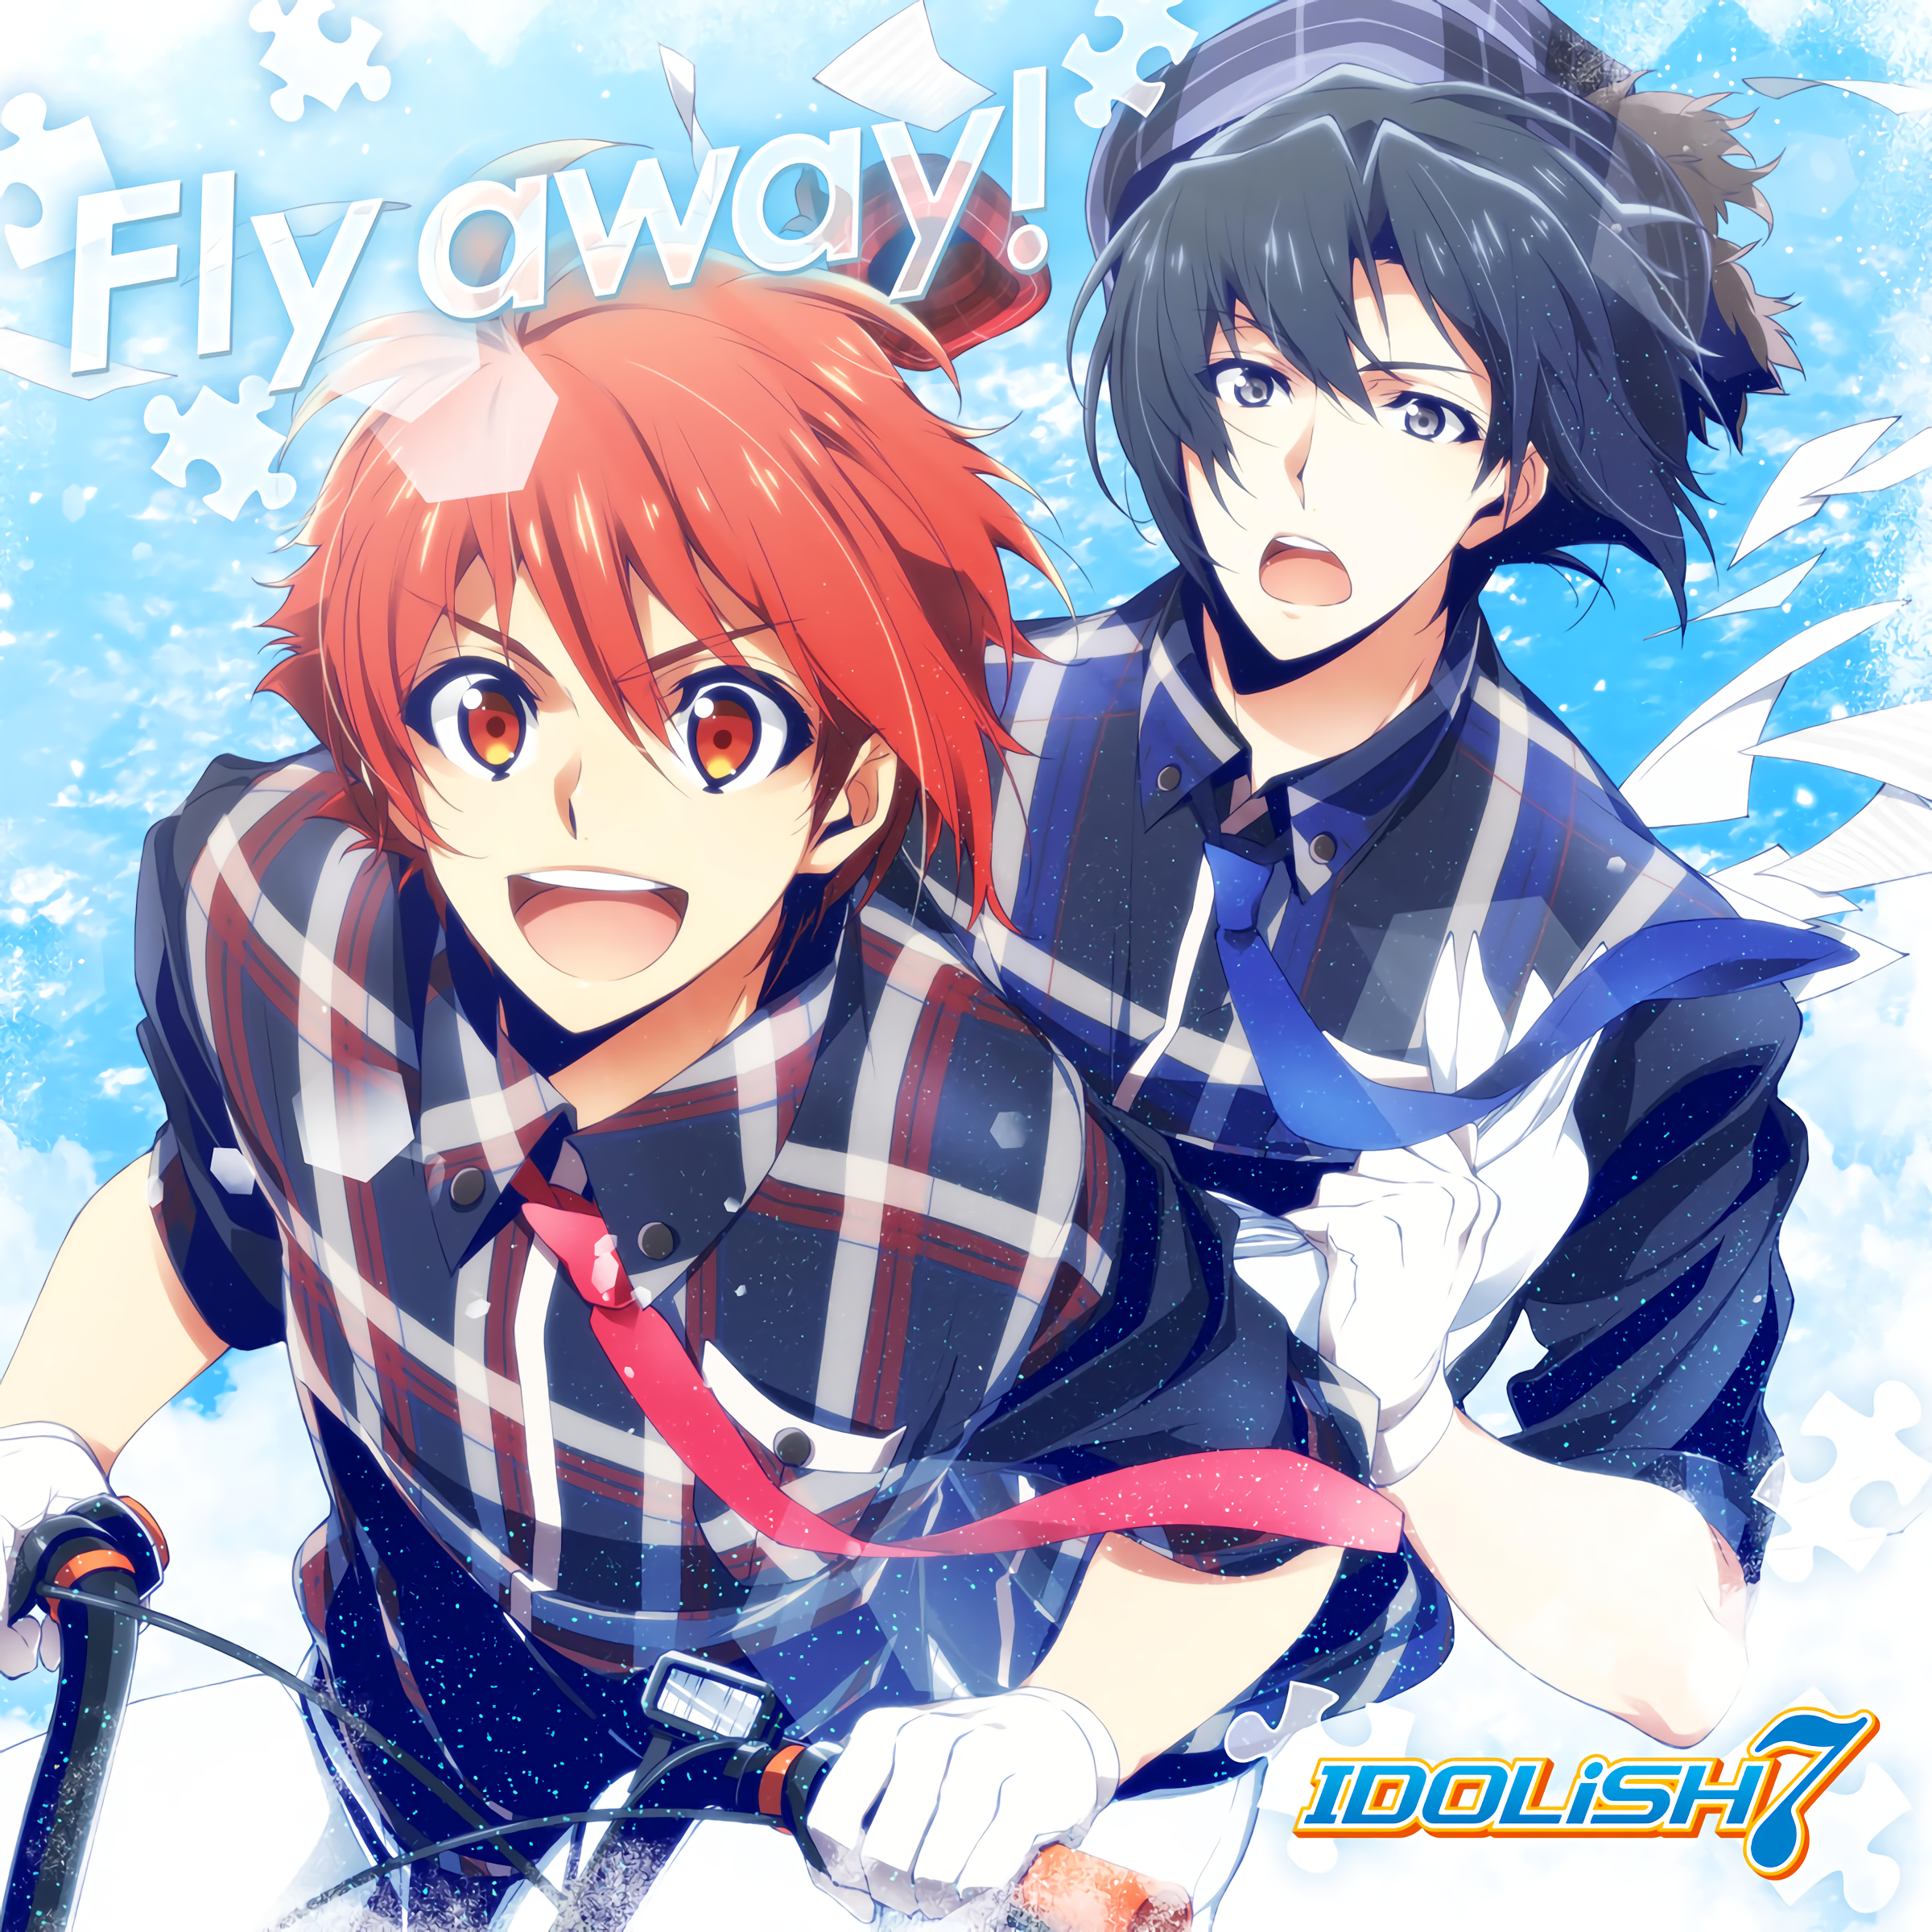 Fly Away The English Idolish7 Wiki Fandom